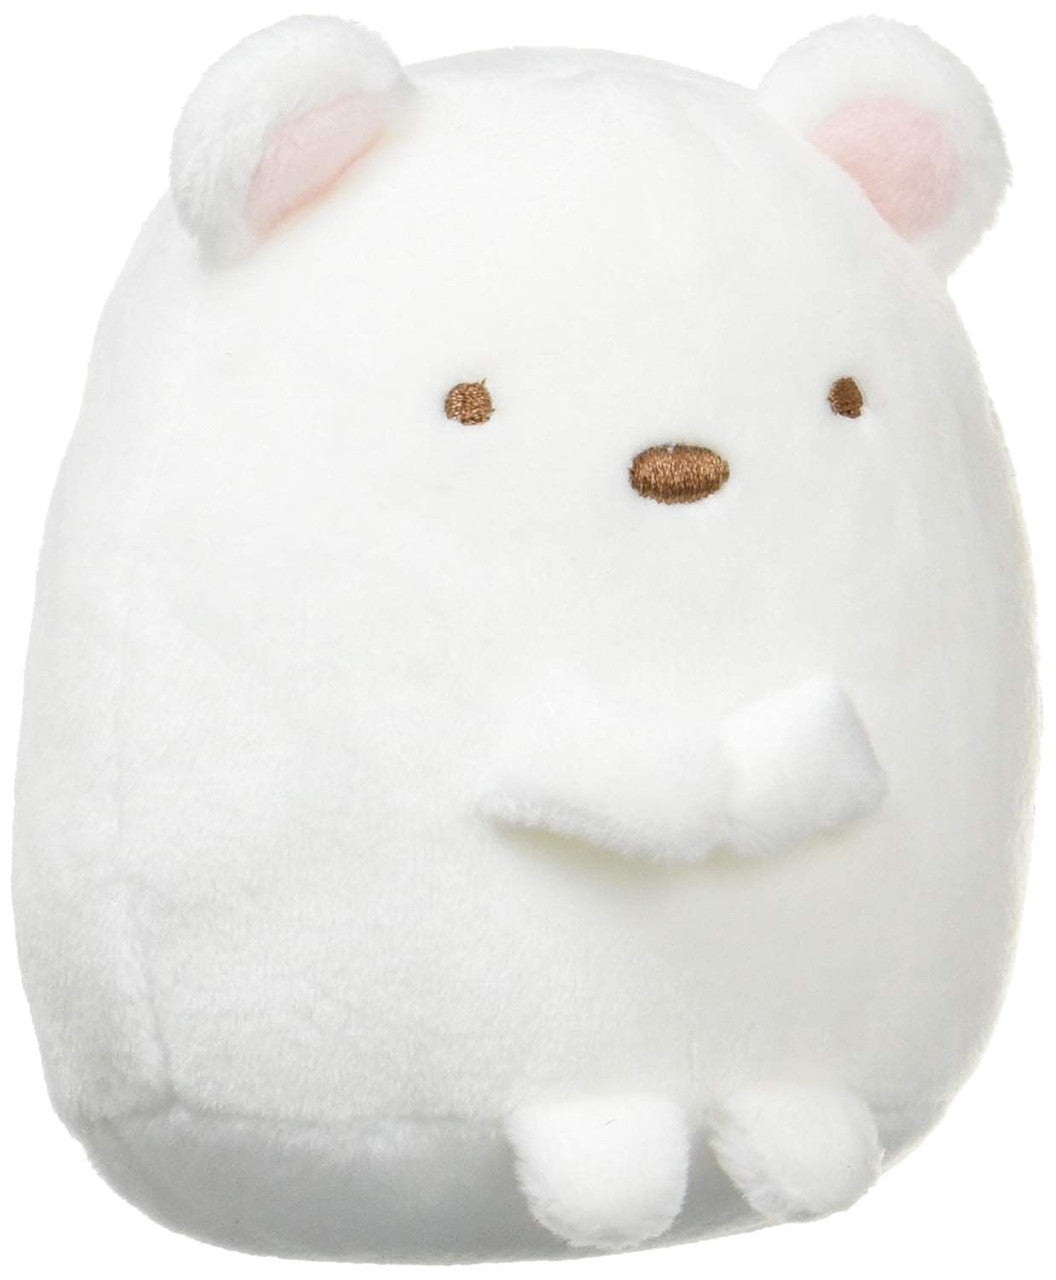 Bag Of Kawaii Plushies Soft Toys San-X Japan Cute